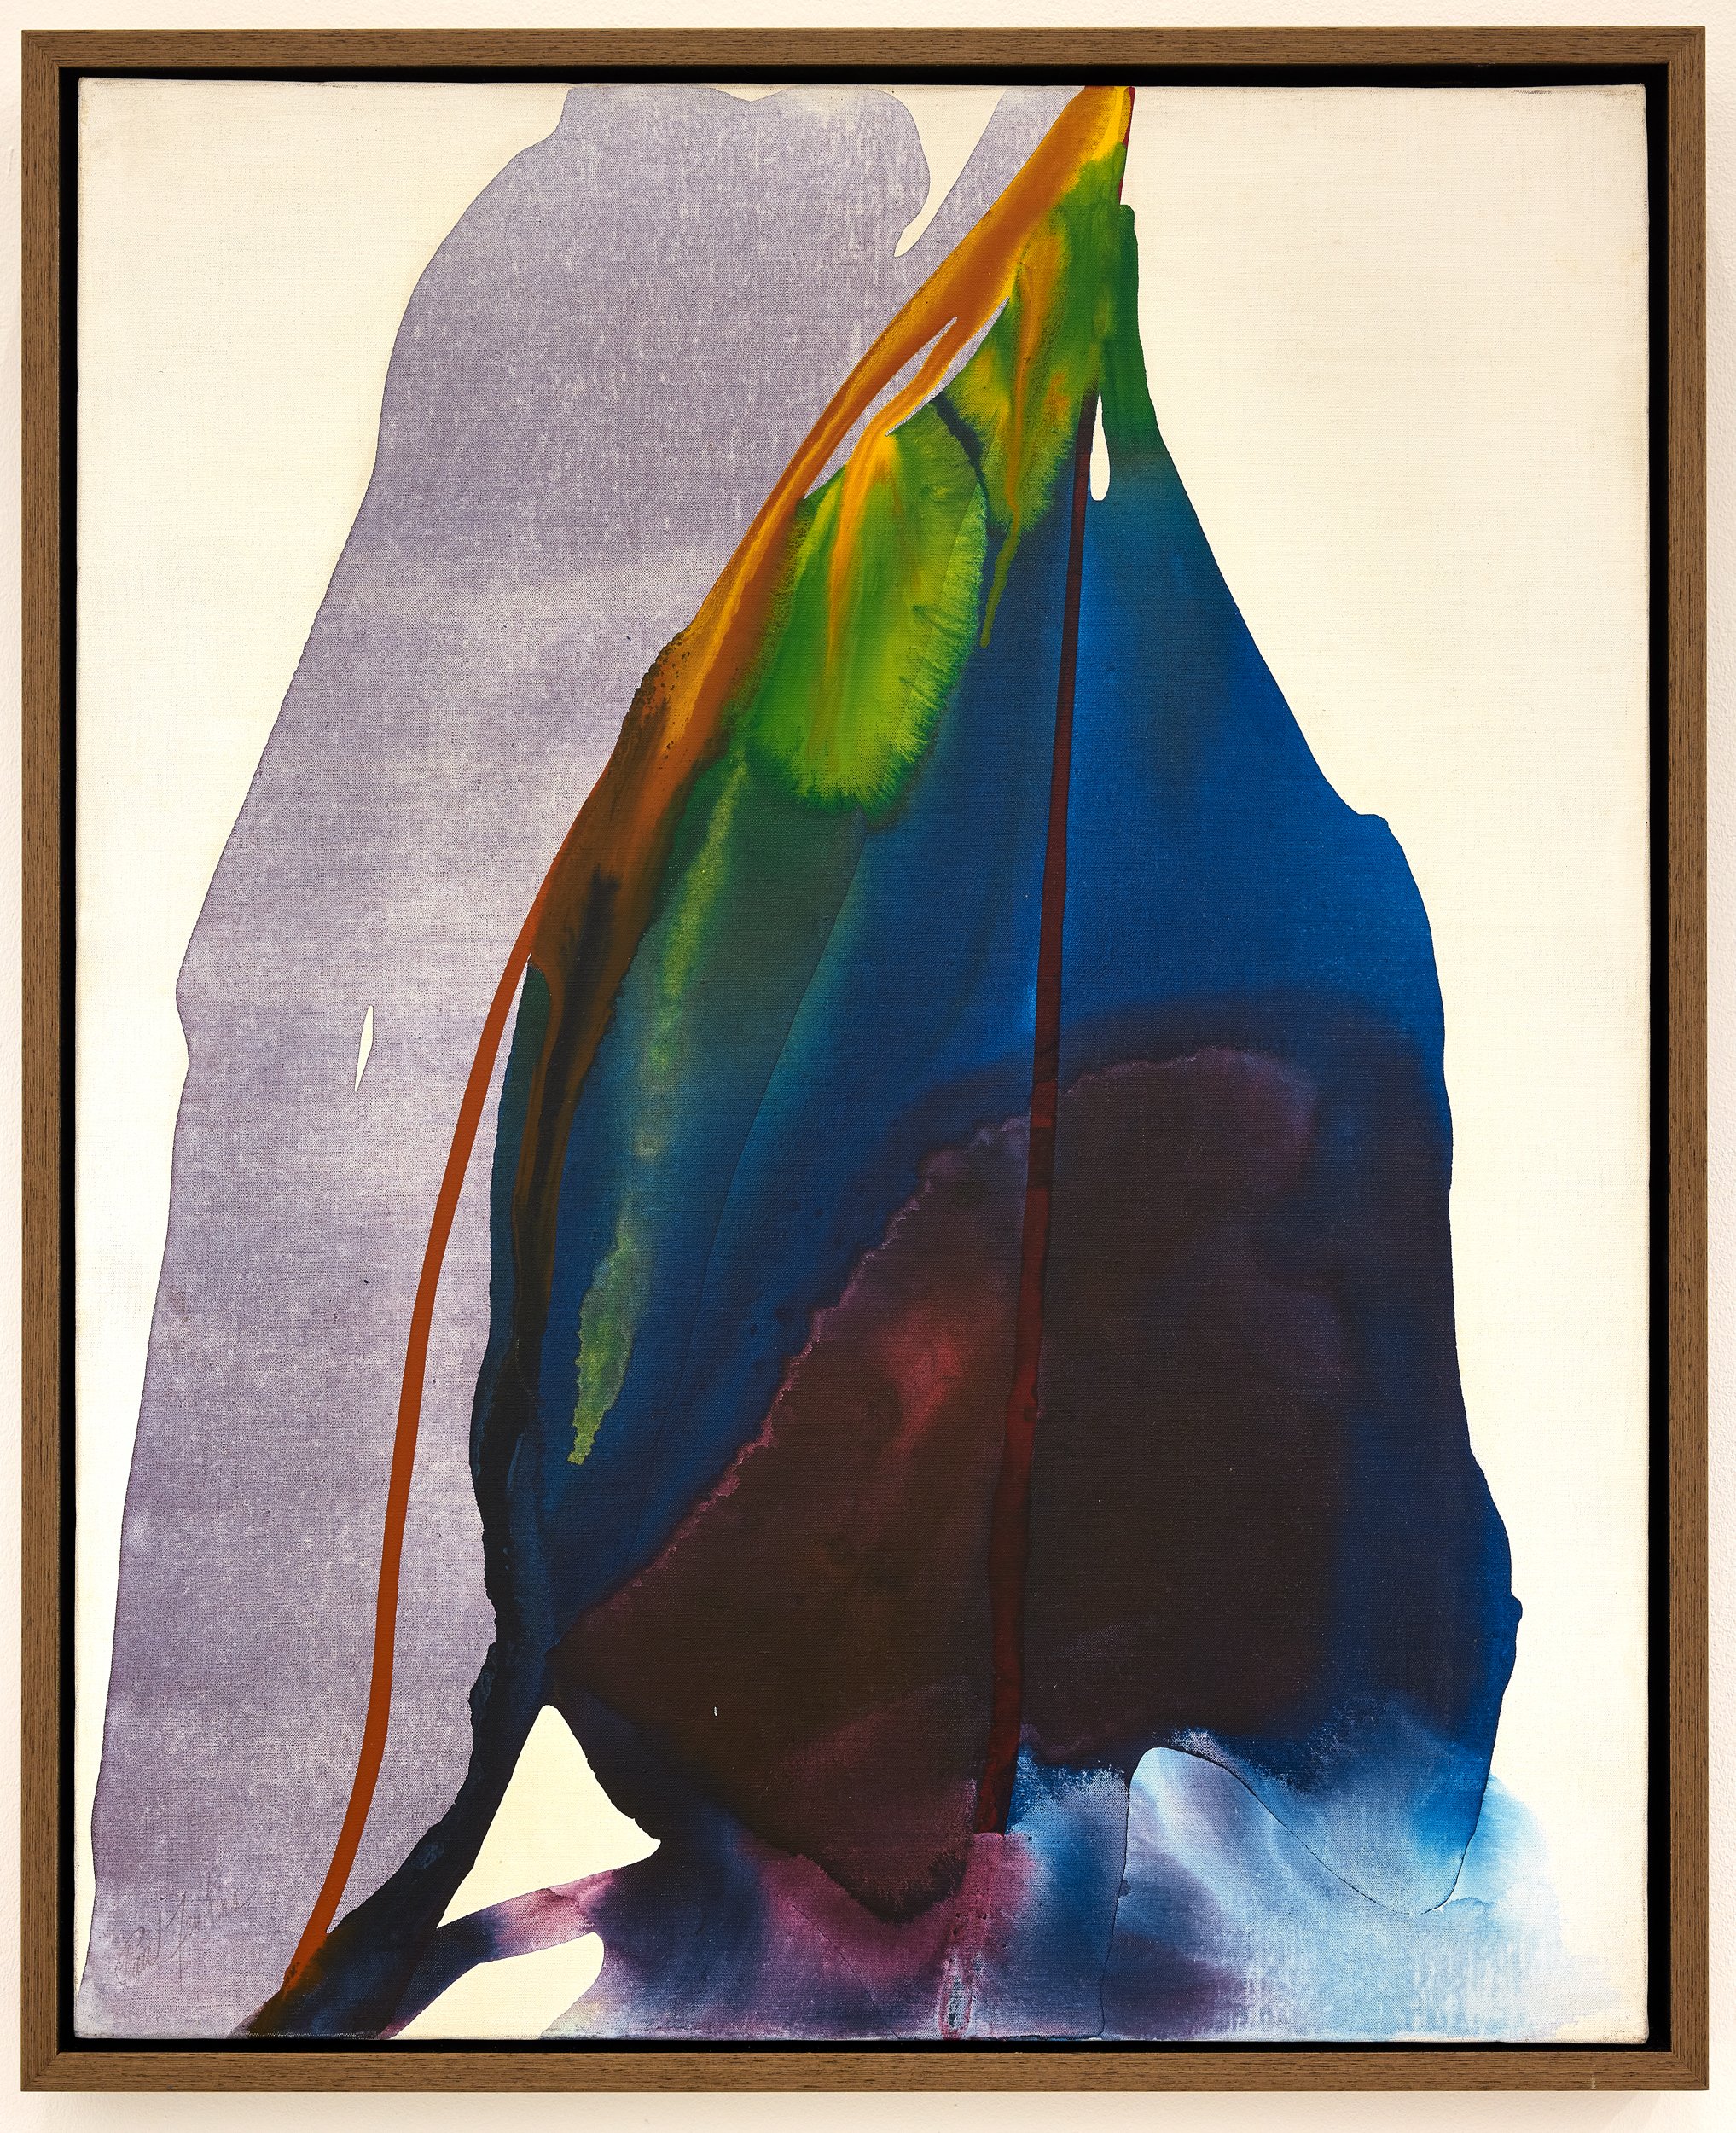 Paul Jenkins, Phenomena Shadow Over Shoulder, 1962, acrylic on canvas, 31 7:8 x 25 5:8 in, 81 x 65 cm LR